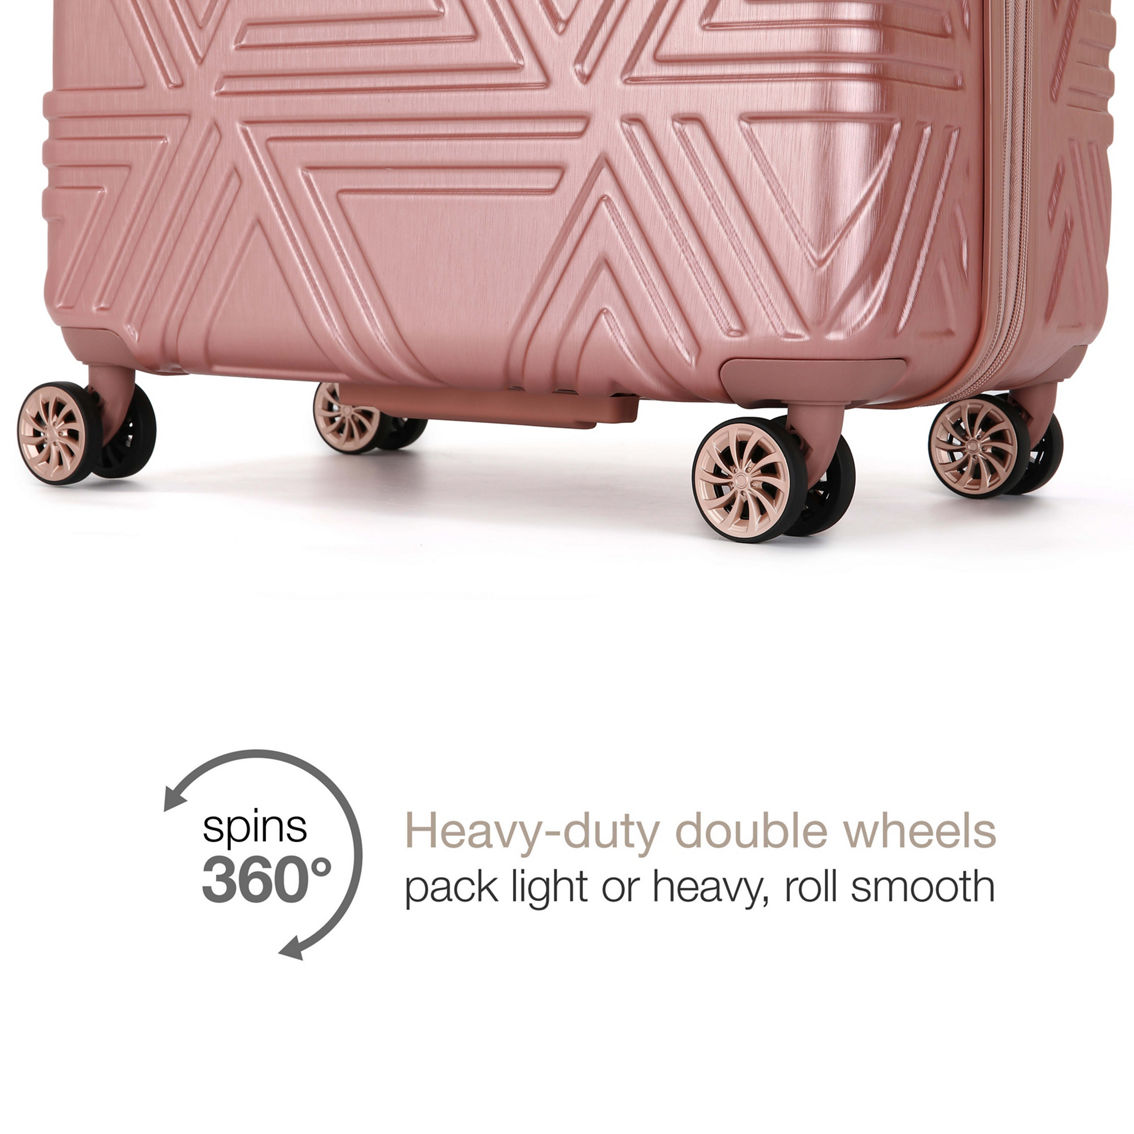 BADGLEY MISCHKA Contour 3 Piece Expandable Spinner Luggage Set - Image 3 of 5